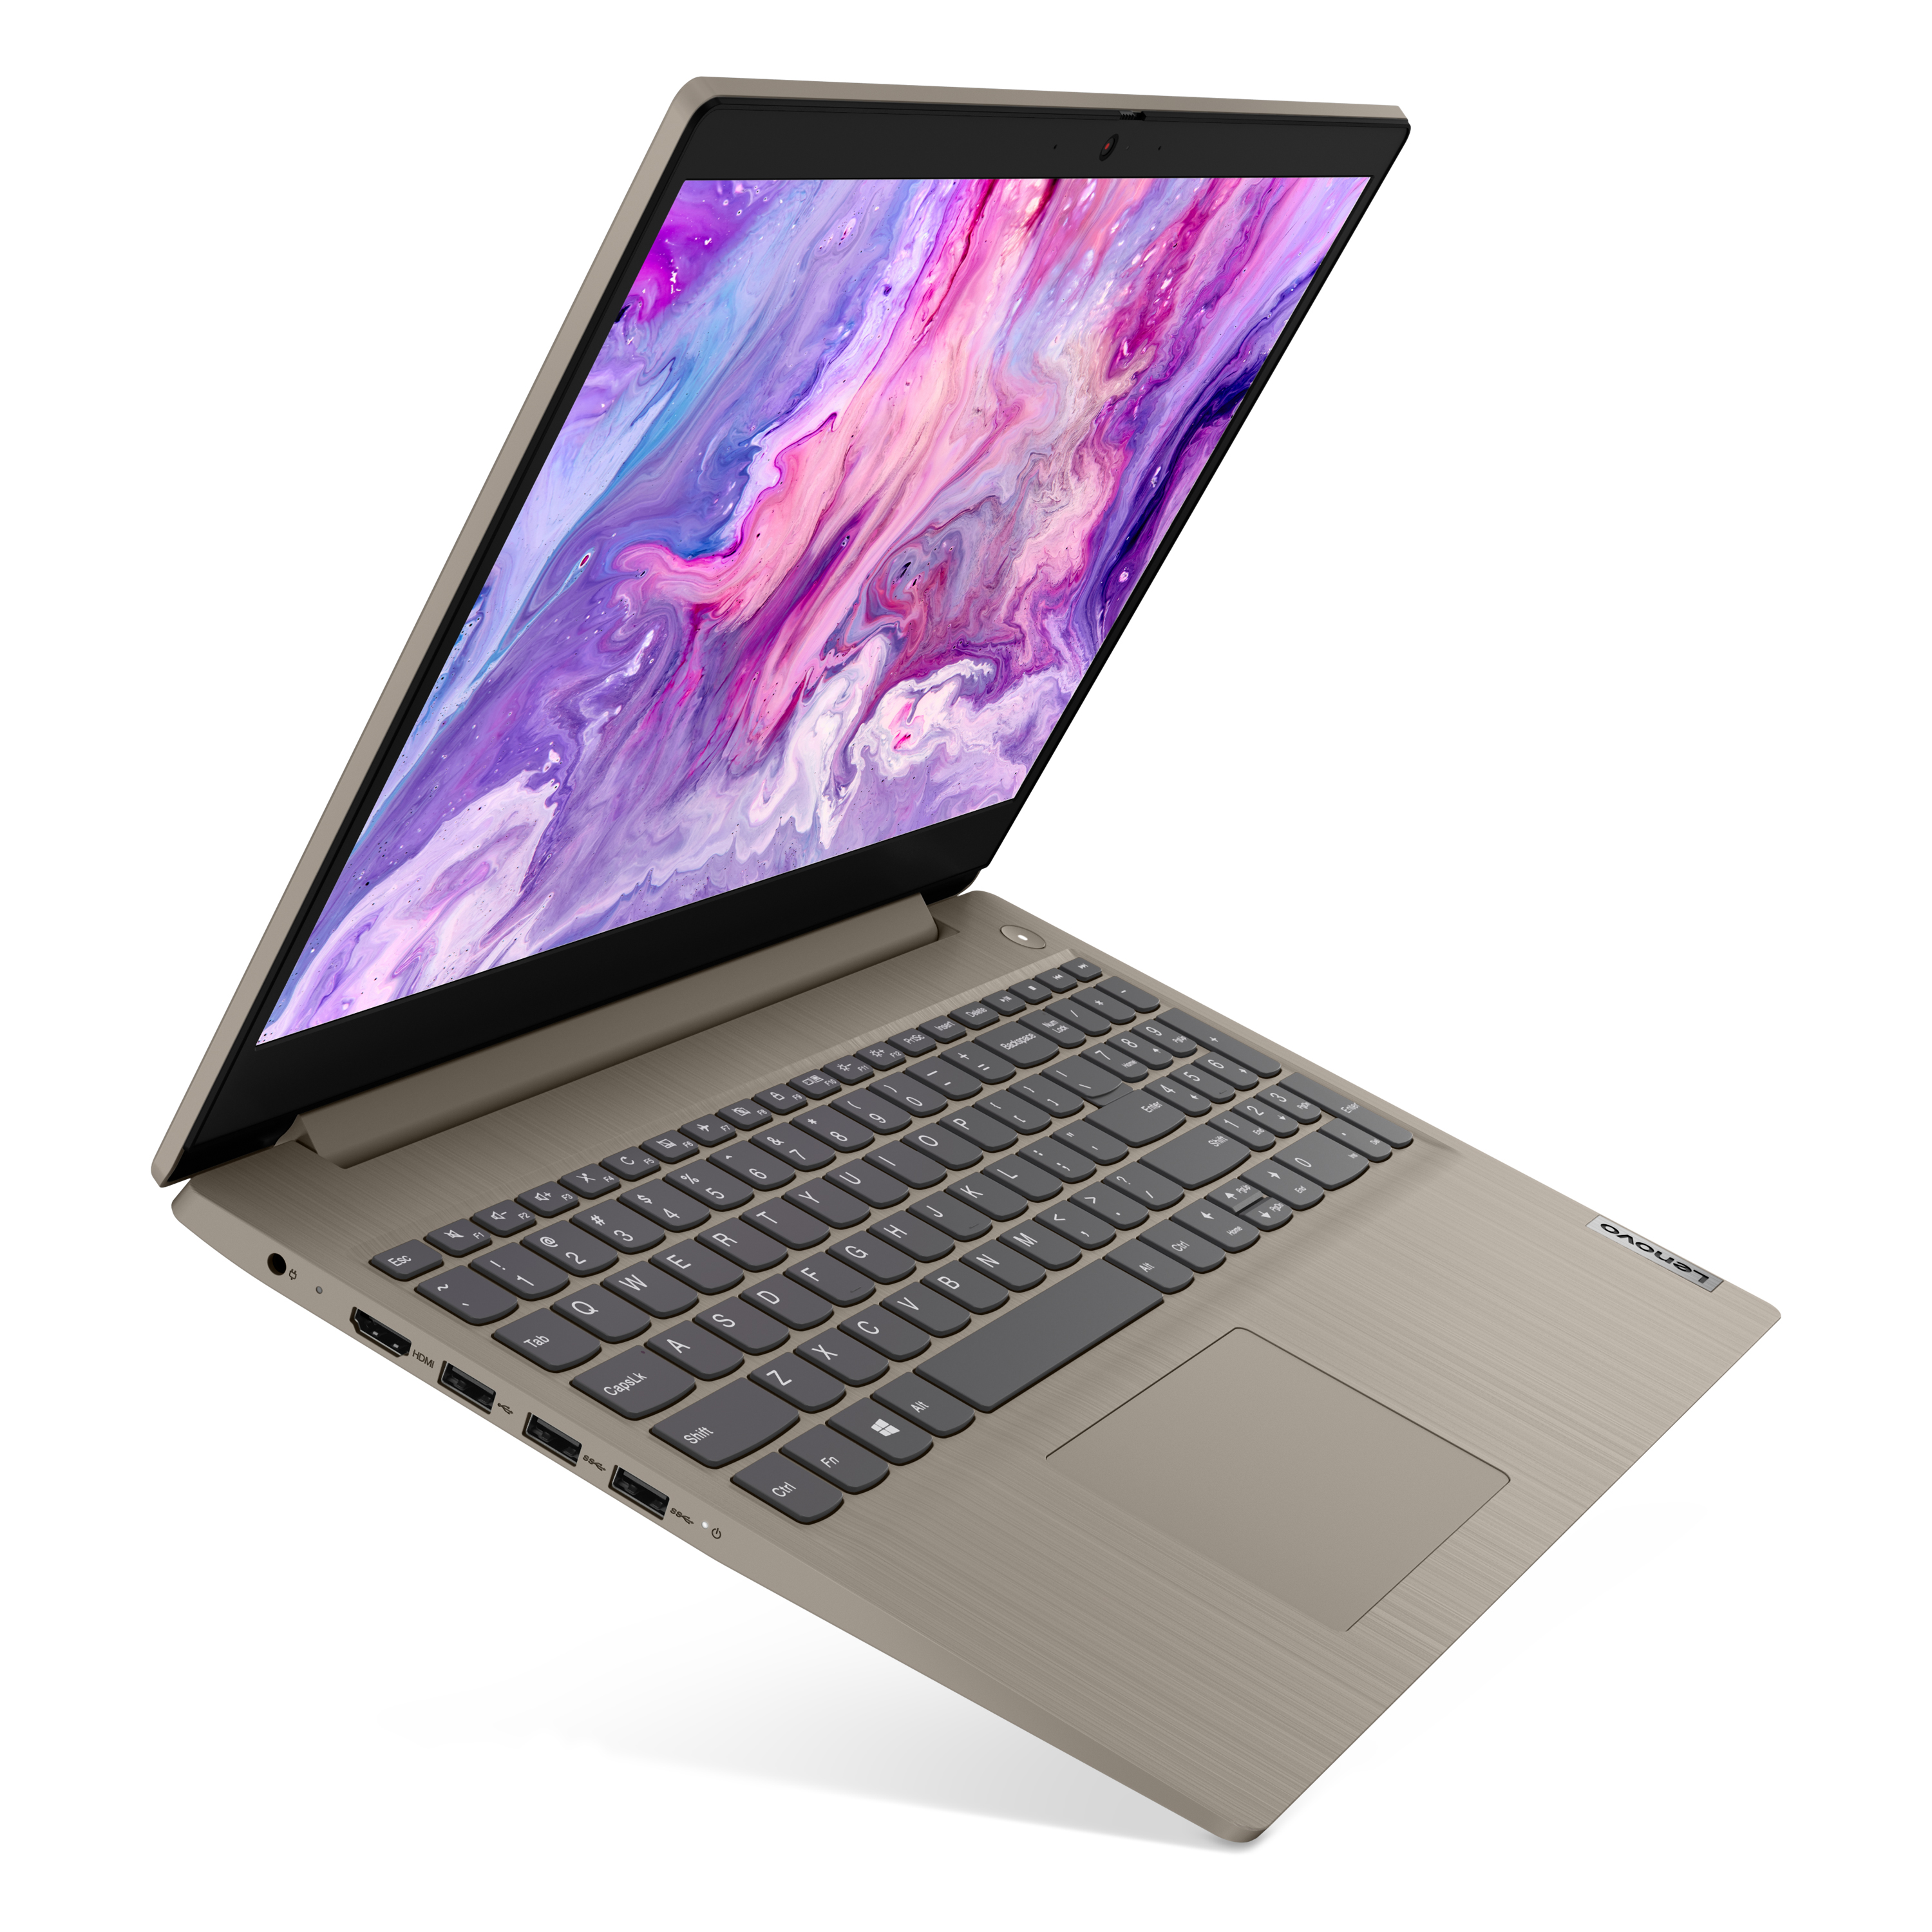 Lenovo IdeaPad 3 15" Laptop, Intel Core i5-1035G1 Quad-Core Processor, 8GB Memory, 256GB Solid State Drive, Windows 10, Almond, 81WE00EPUS (Google Classroom Compatible) - image 16 of 16